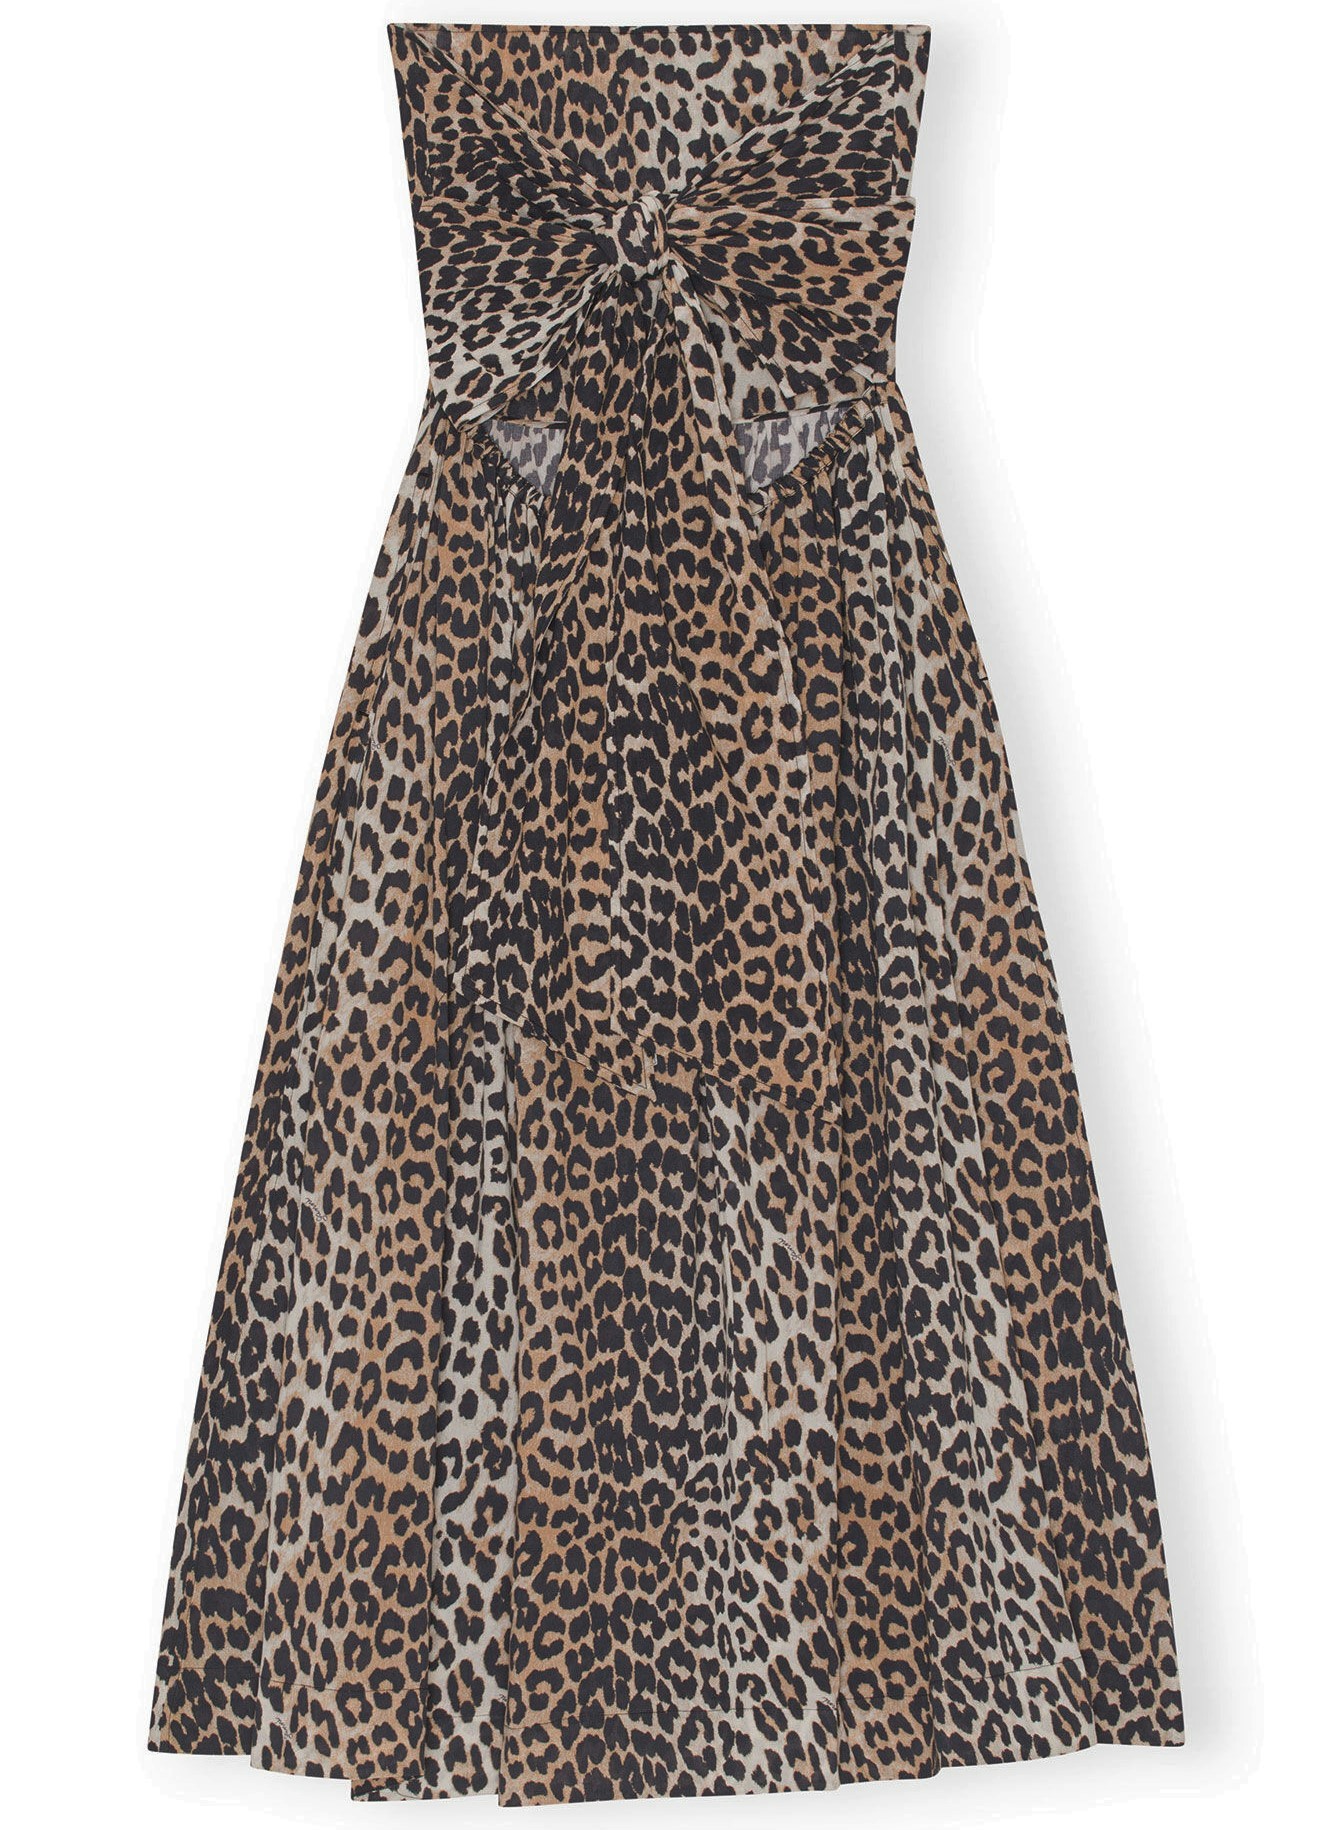 GANNI Light Cotton Tieband Multifunctional Dress in Leopard XXS / XS